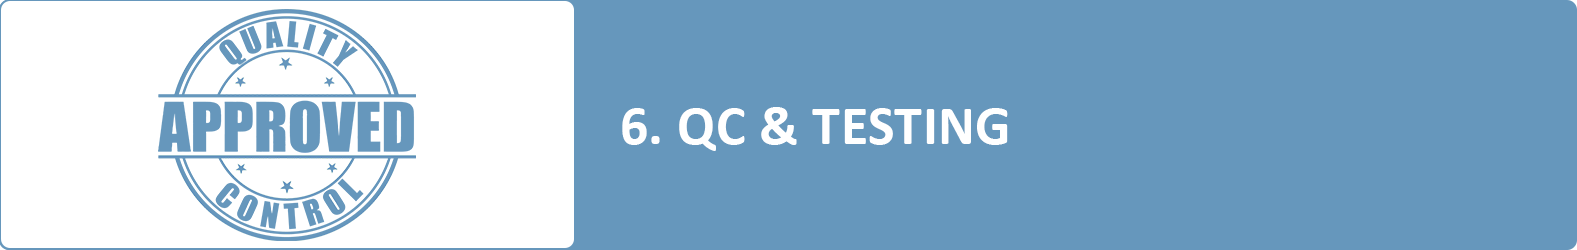 qc & testing